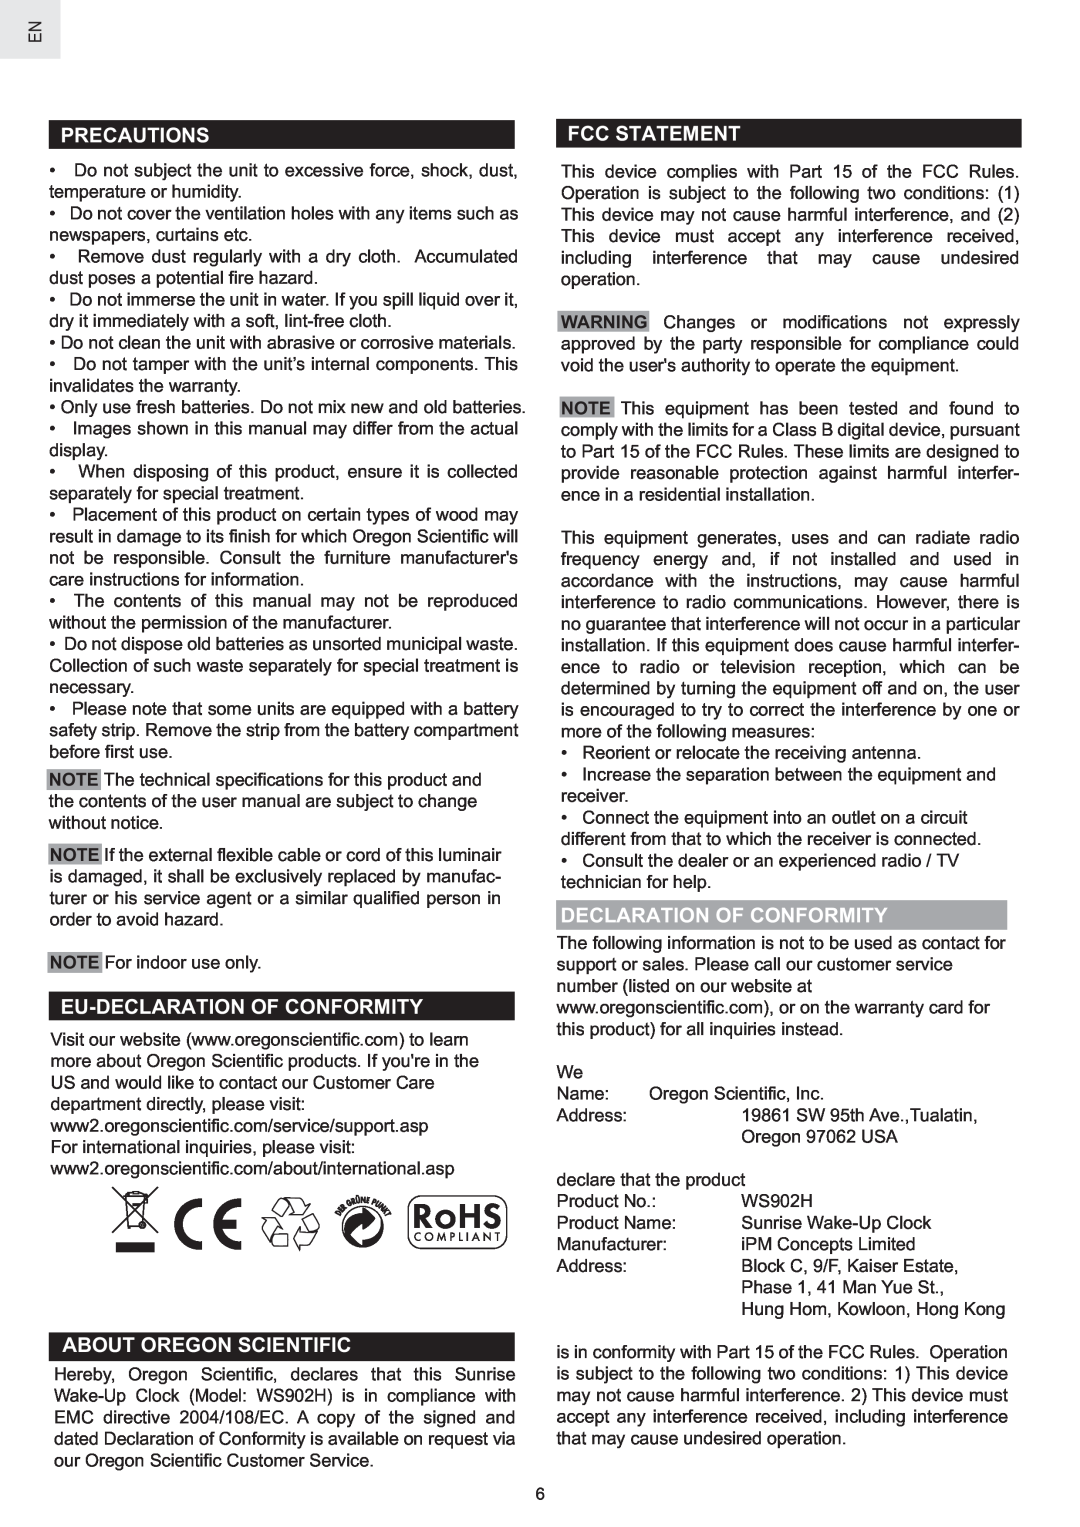 Oregon Scientific WS902H user manual Precautions, Eu-Declaration Of Conformity, About Oregon Scientific, Fcc Statement 